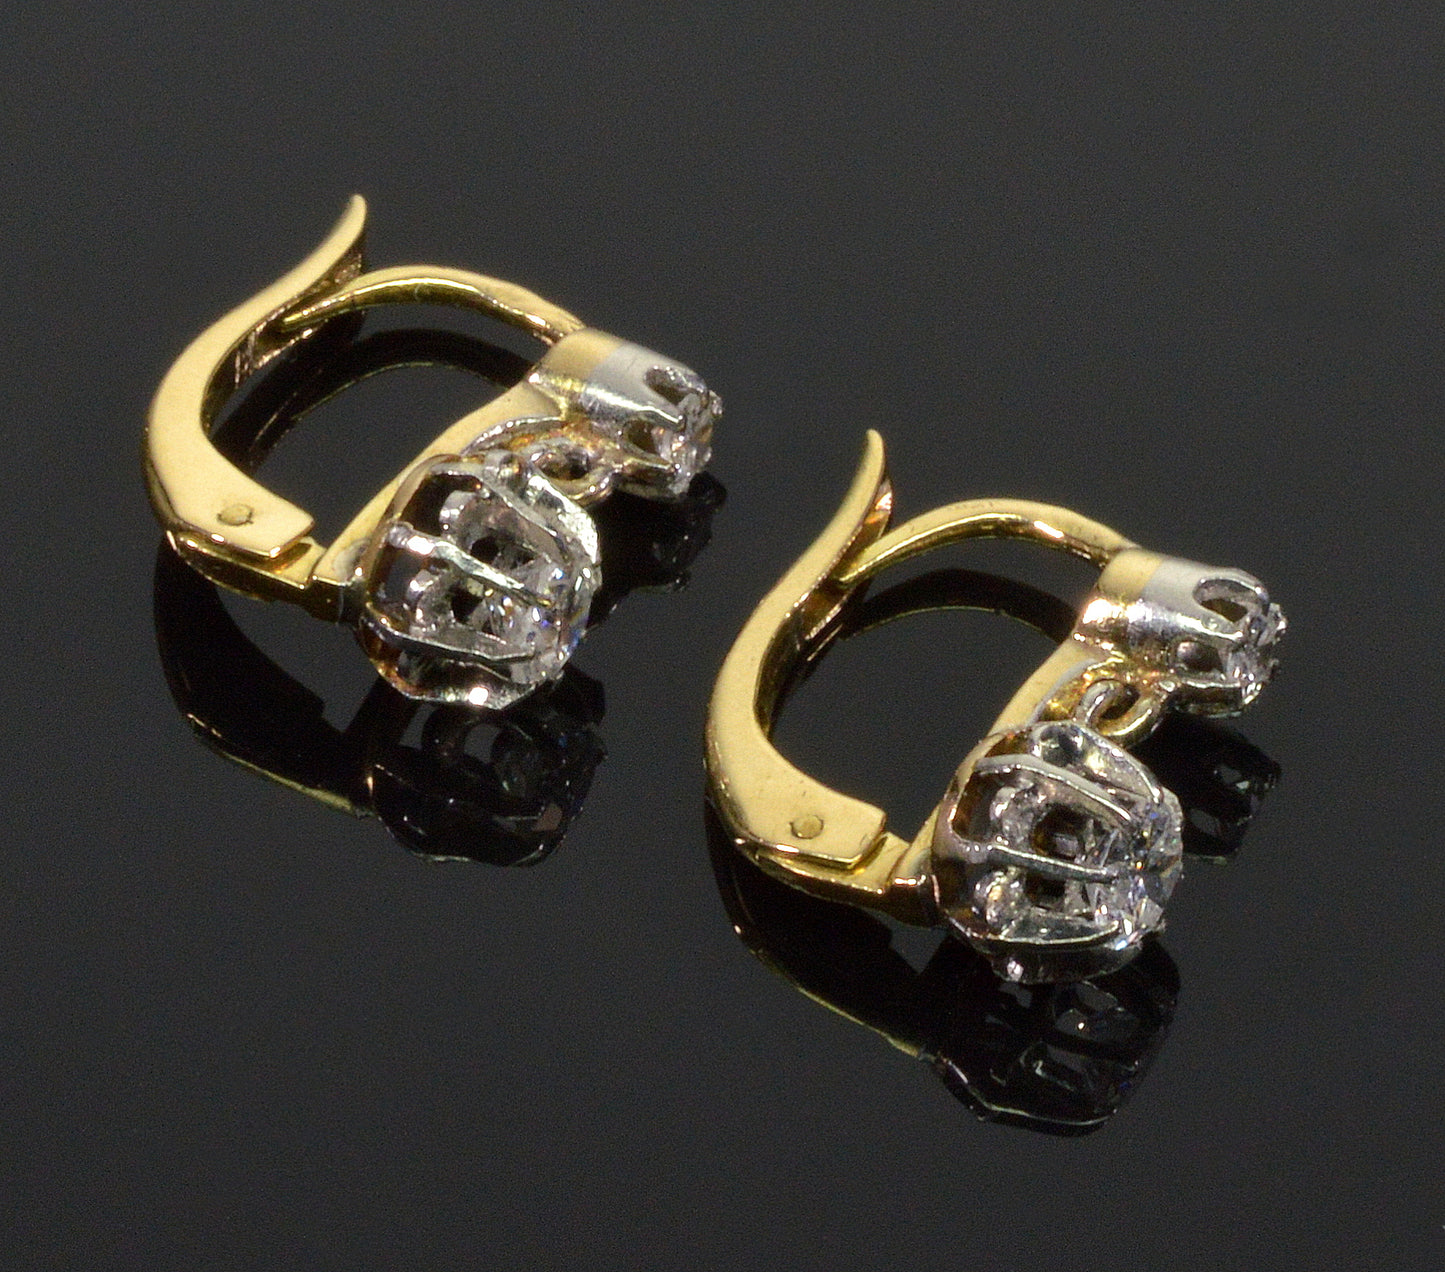 Antique French 18K Gold Platinum 0.4 CTW Diamond Earrings C.1900